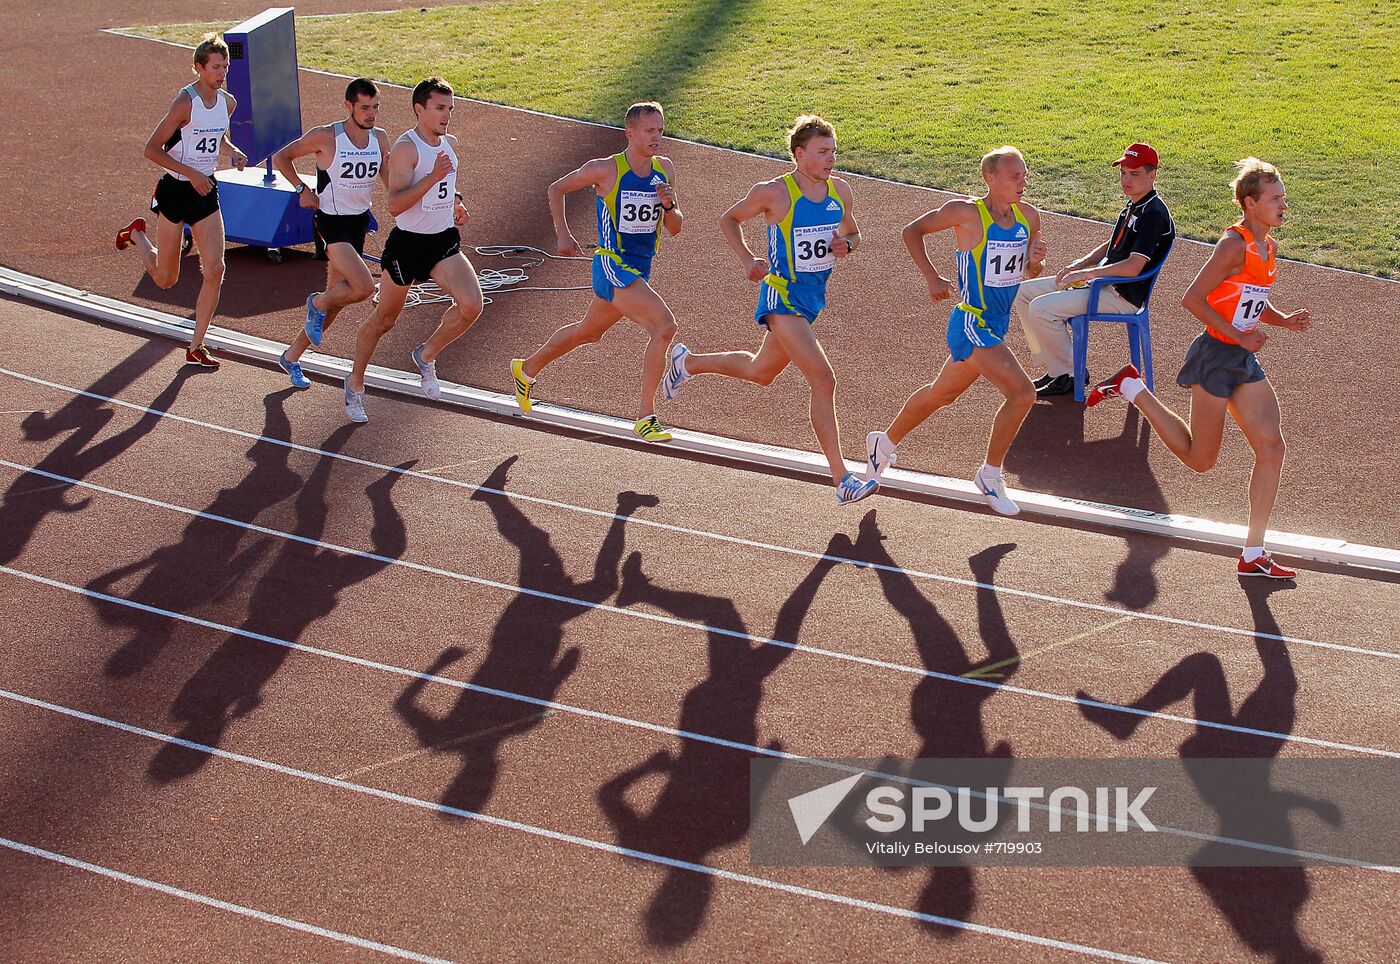 5,000-meter race among men